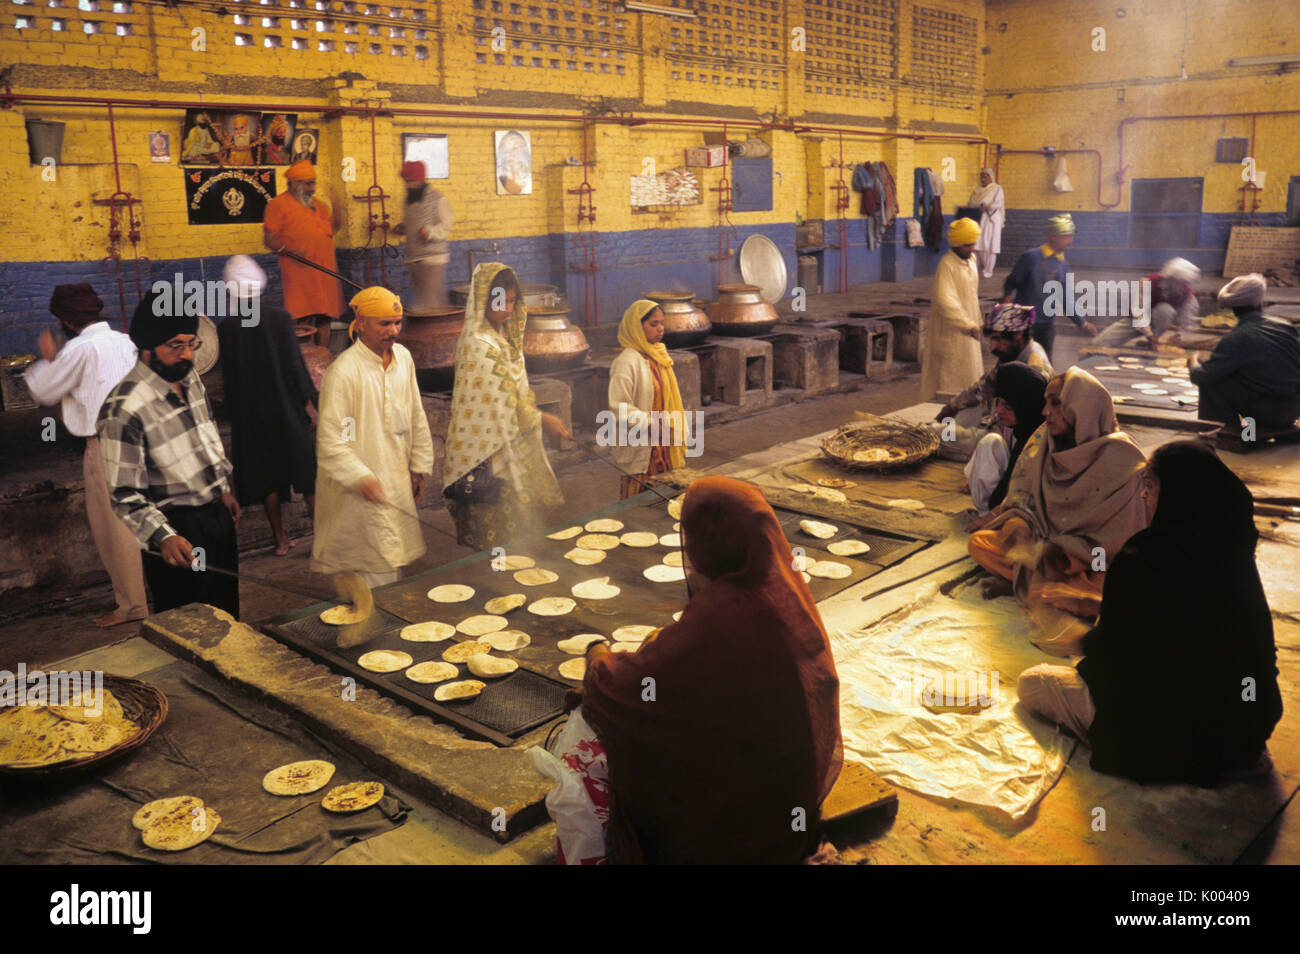 Making chapatis at community kitchen in Gurudwara Bangla Sahib (Sikh temple), Delhi, India Stock Photo